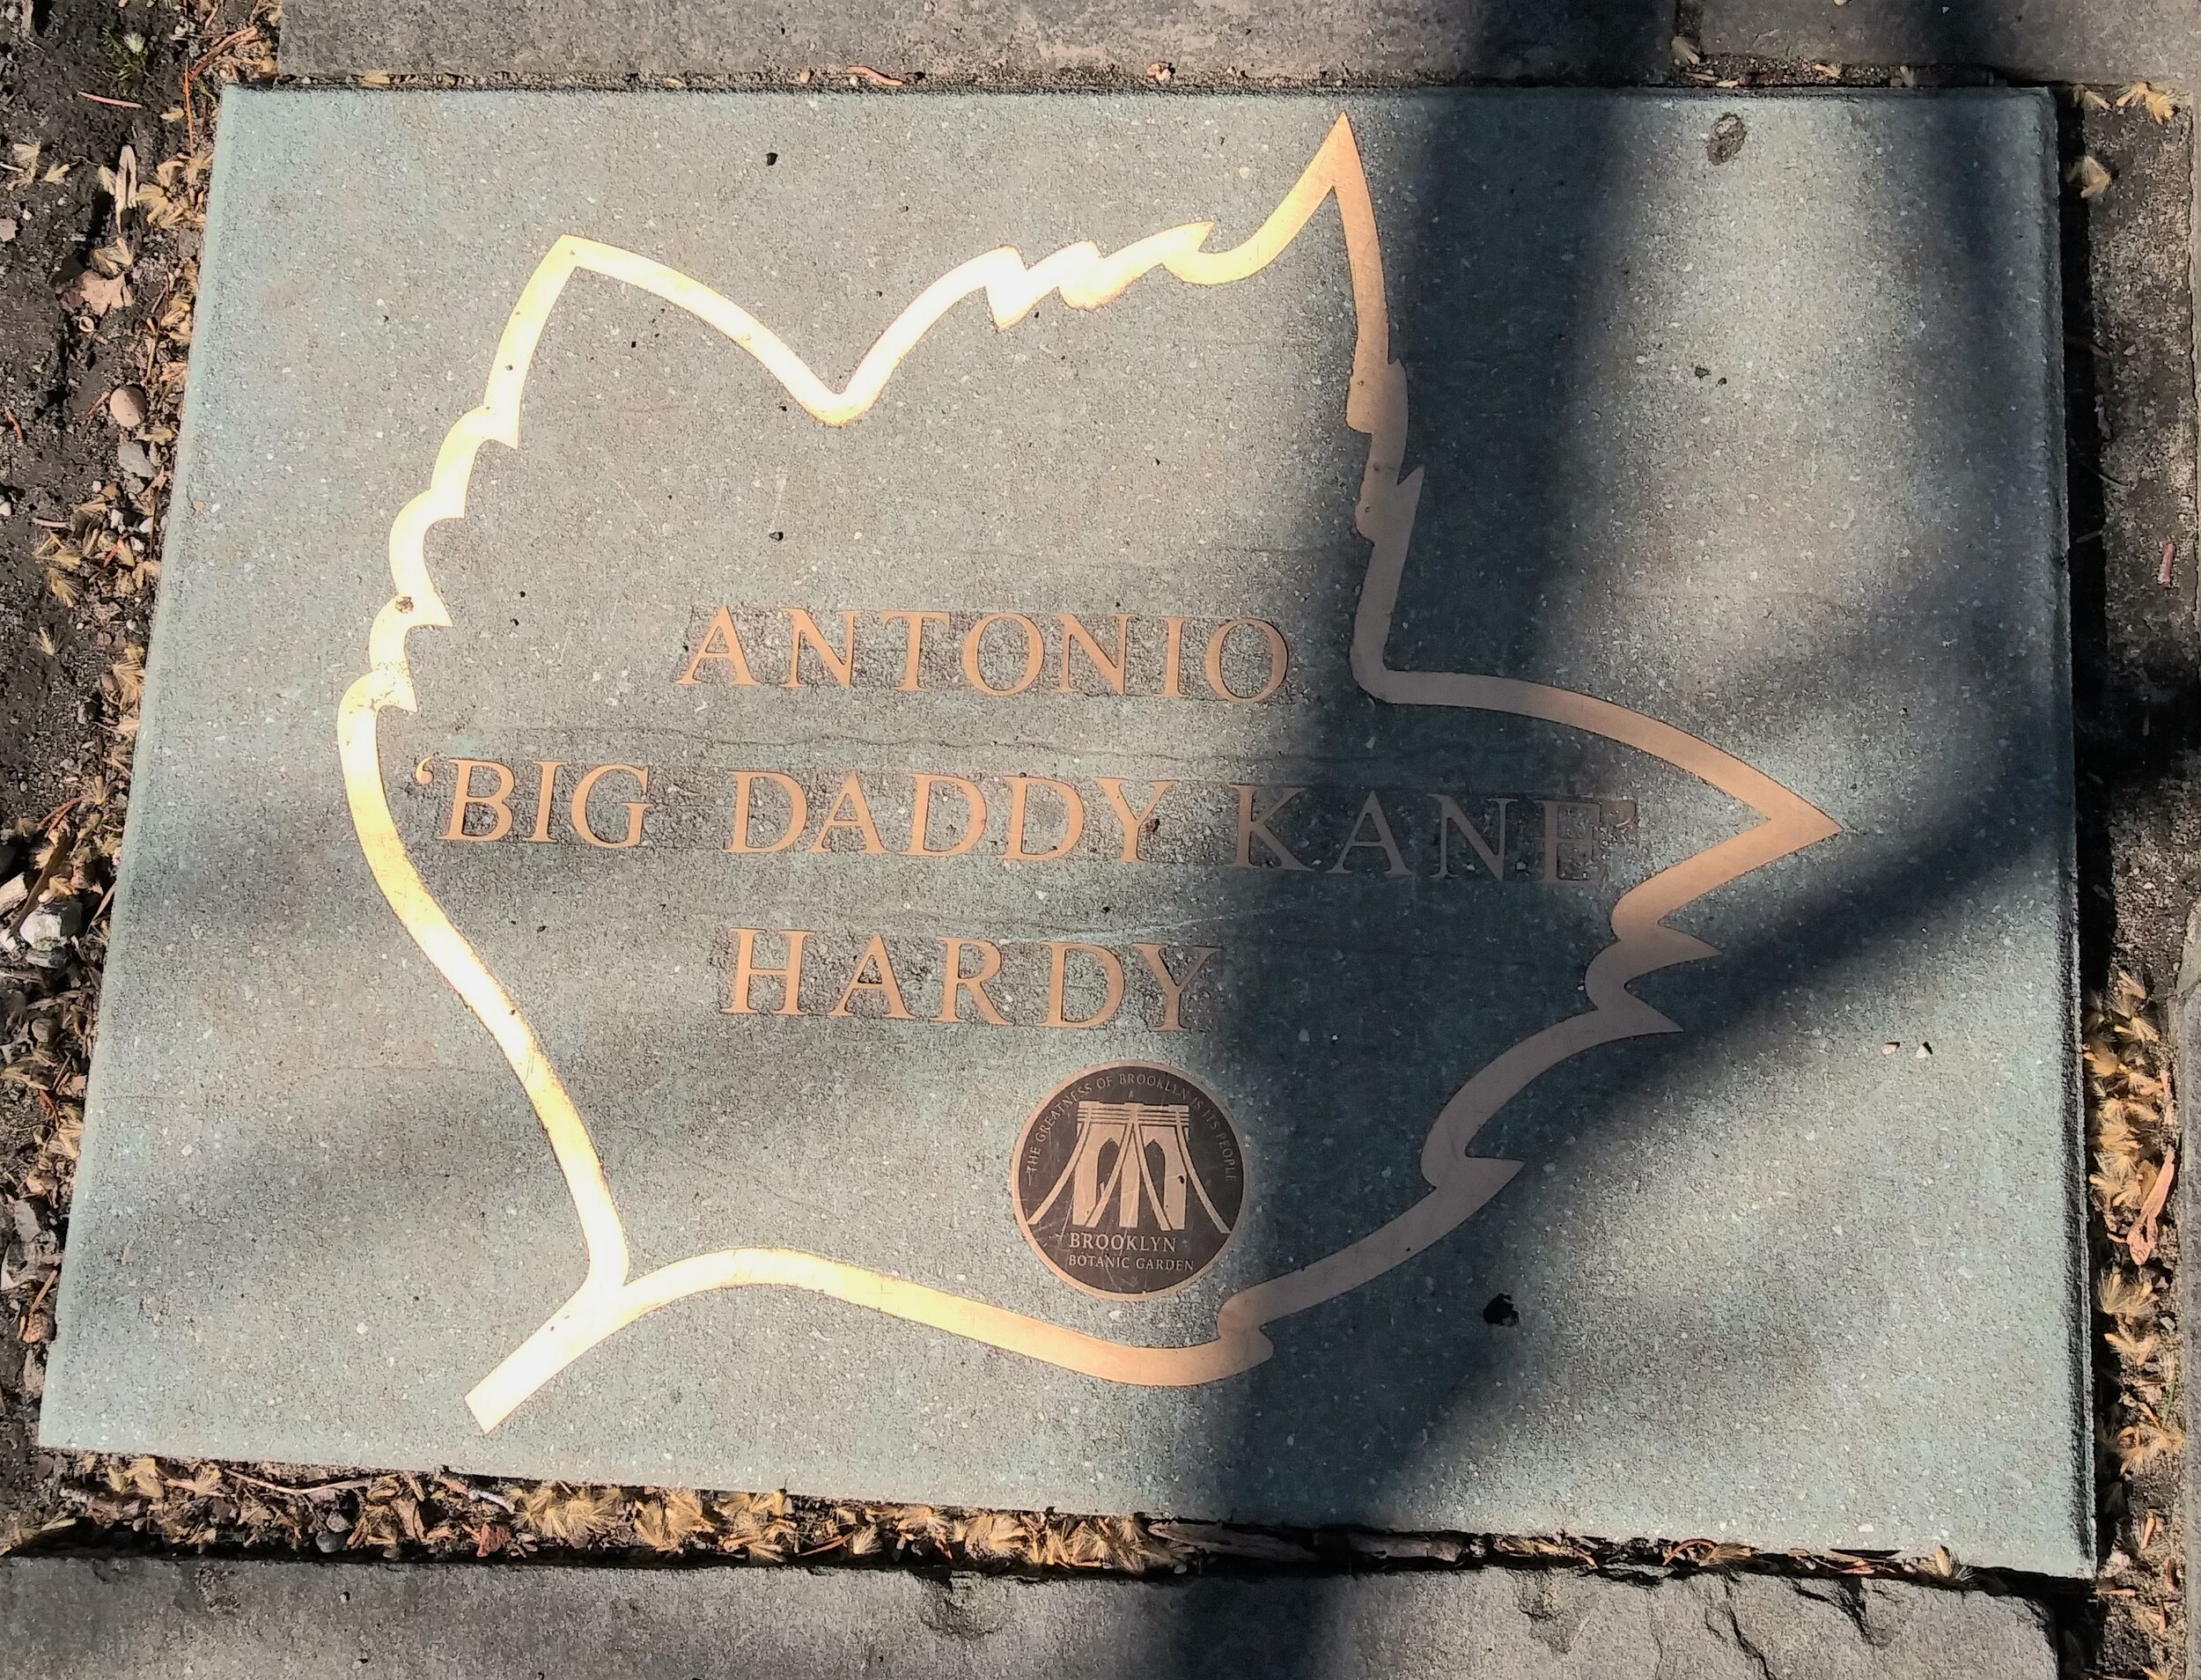 Big Daddy Kane.jpg